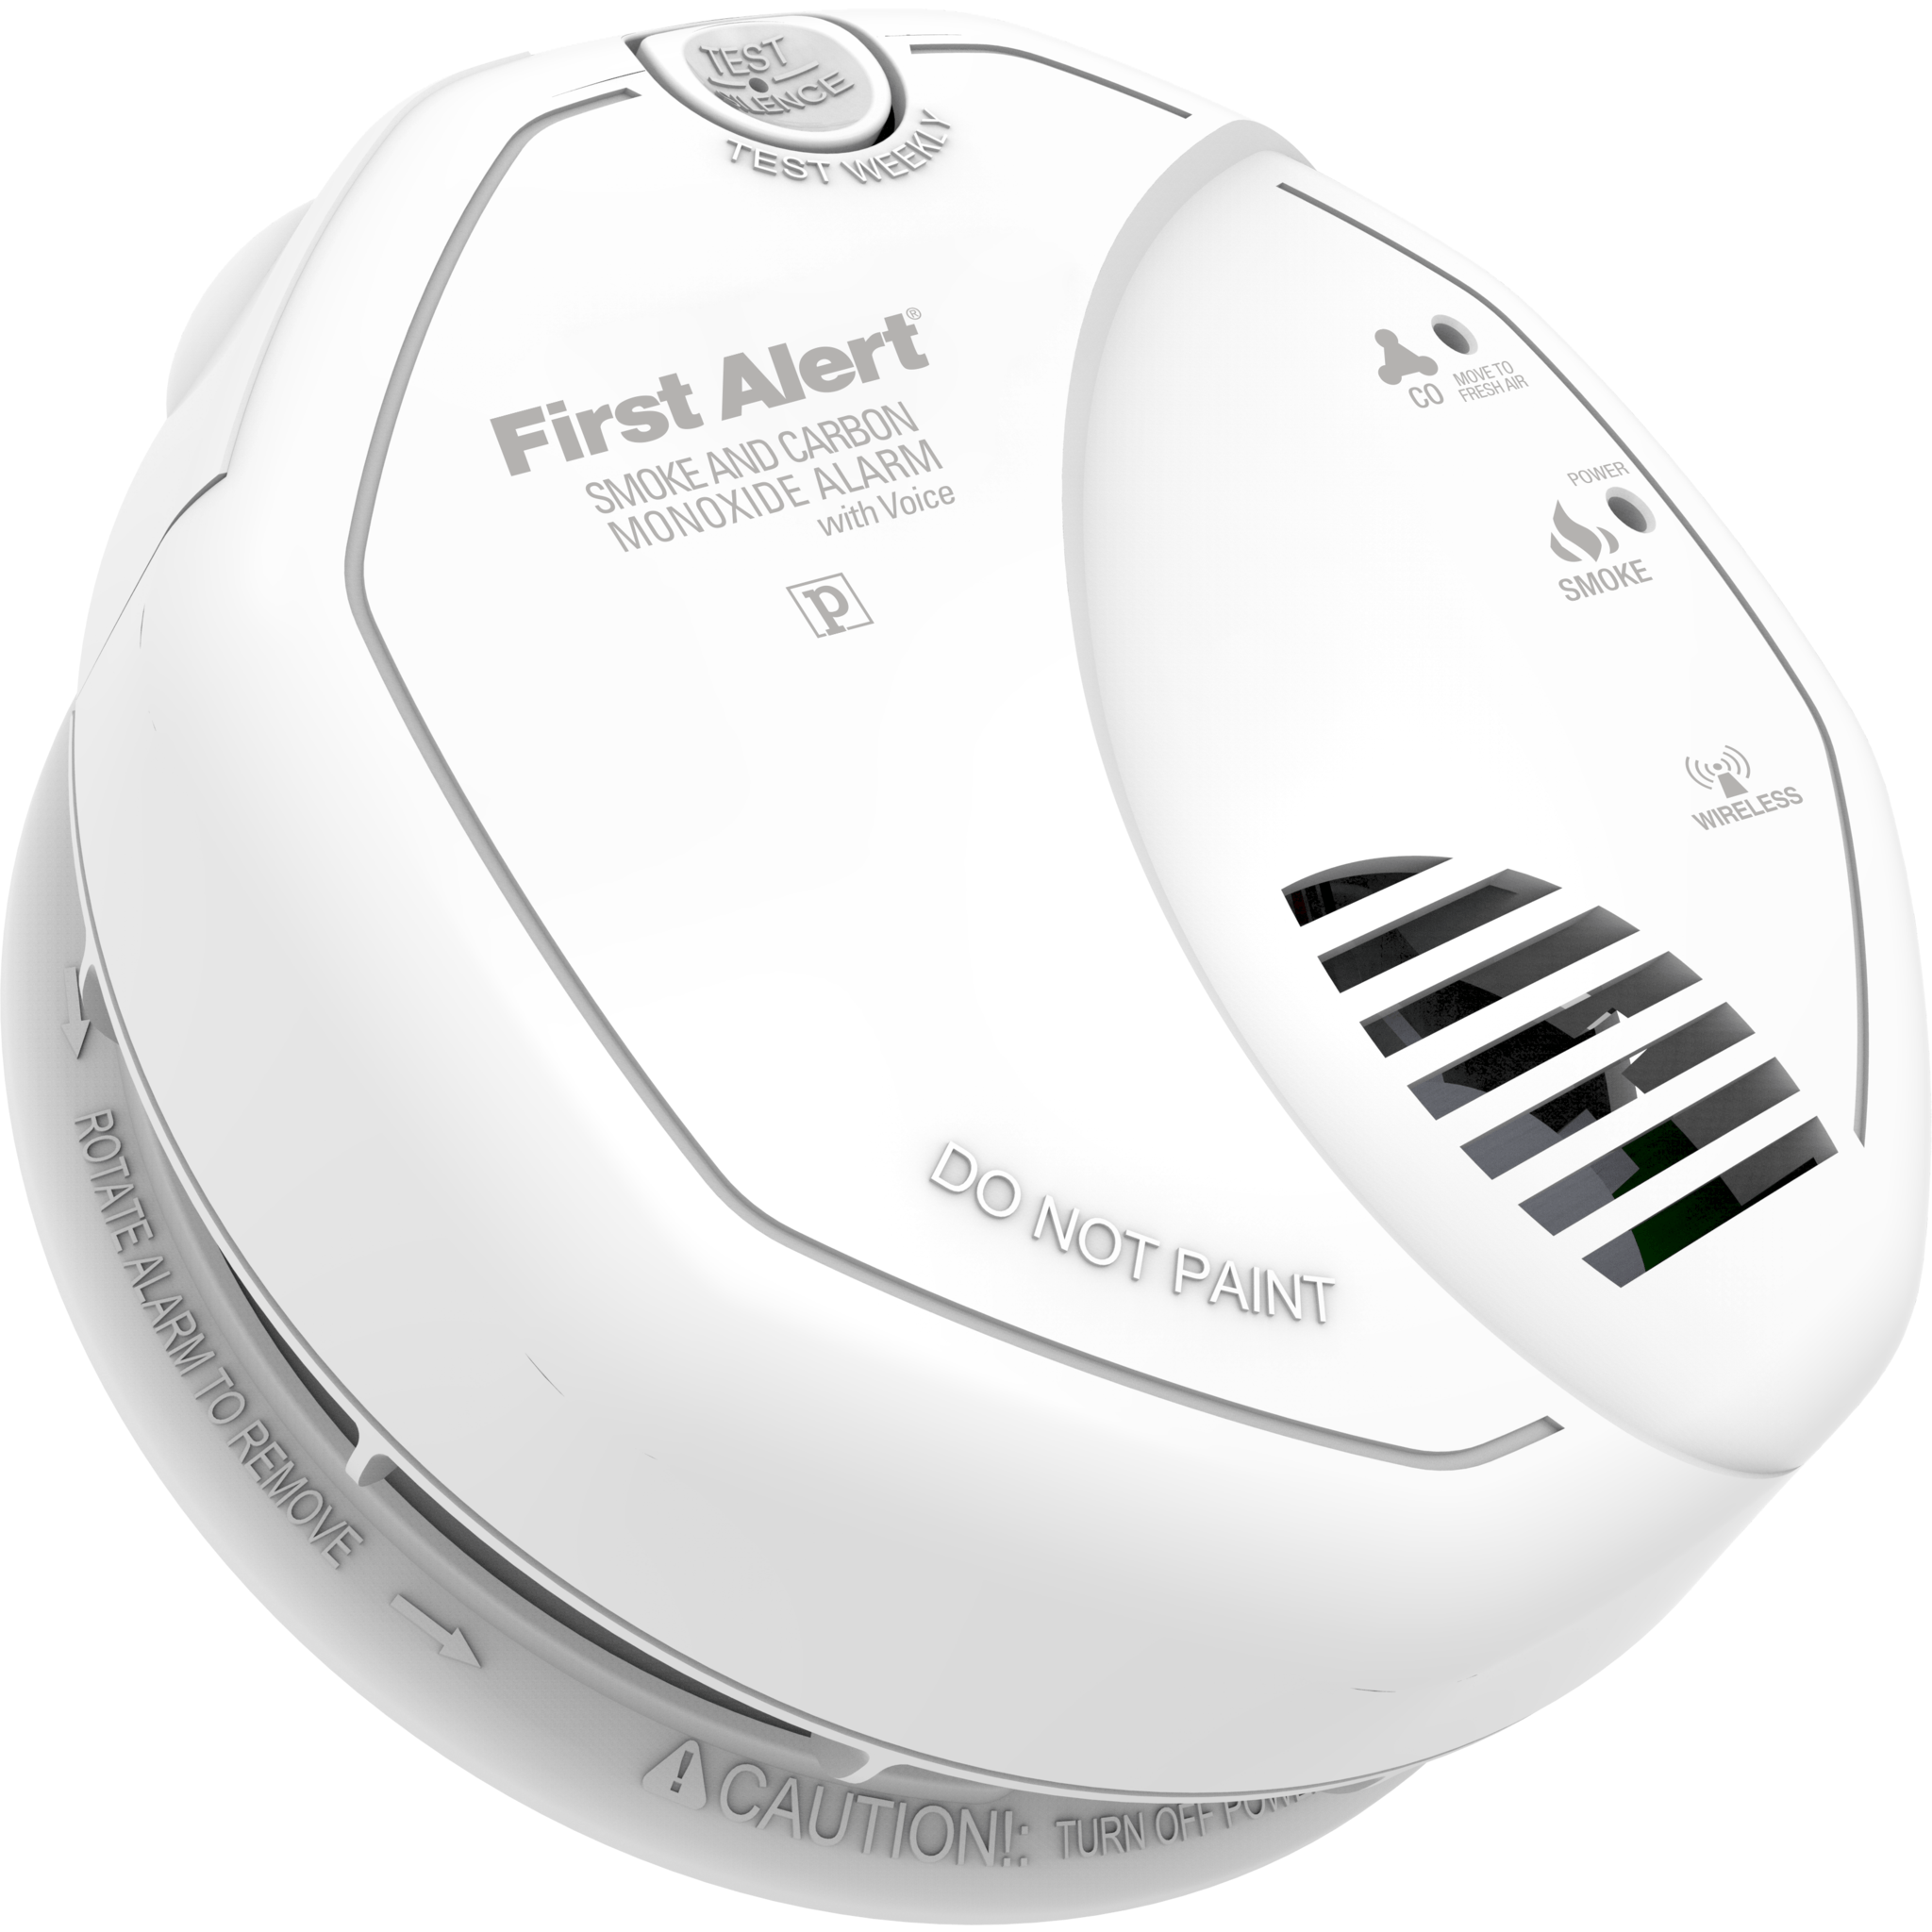 BRK First Alert SCO500B Carbon Monoxide & Smoke Alarm, Wireless